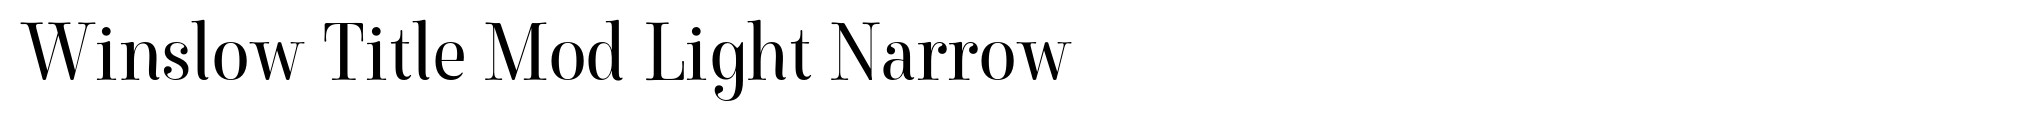 Winslow Title Mod Light Narrow image